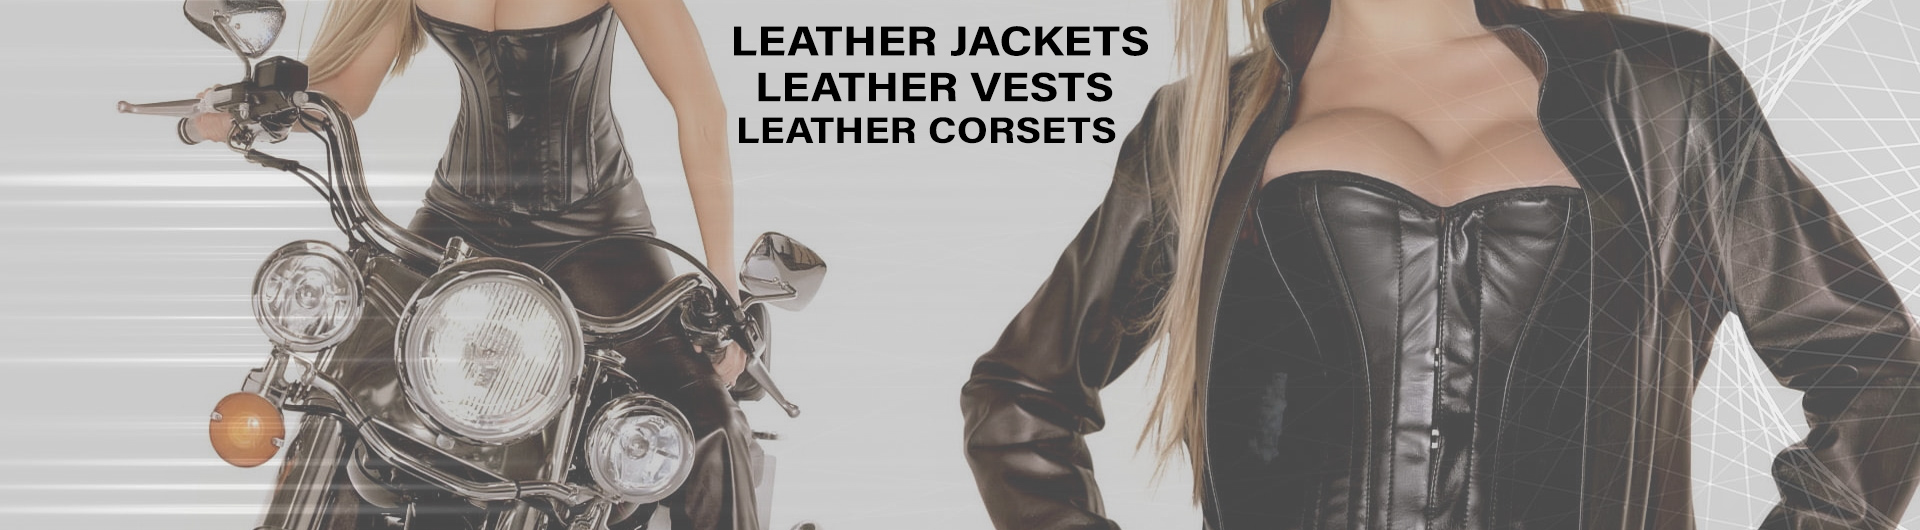 Leather Corsets Jackets & Vests Banner